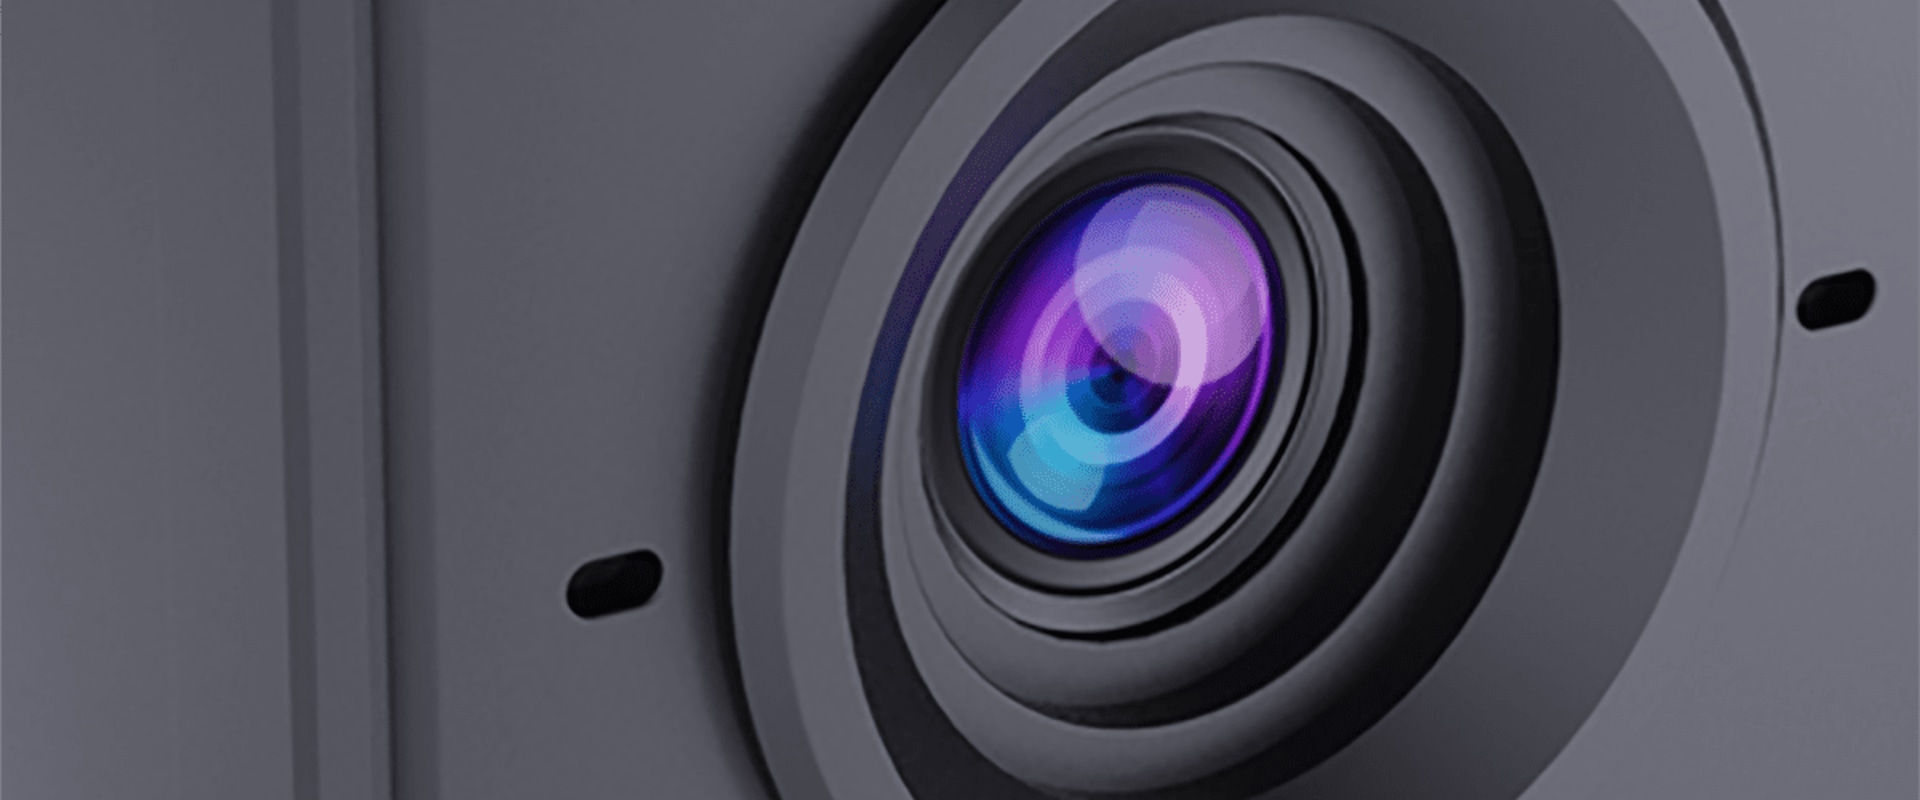 Understanding Webcam Brightness: What is the Maximum Brightness of a Webcam?